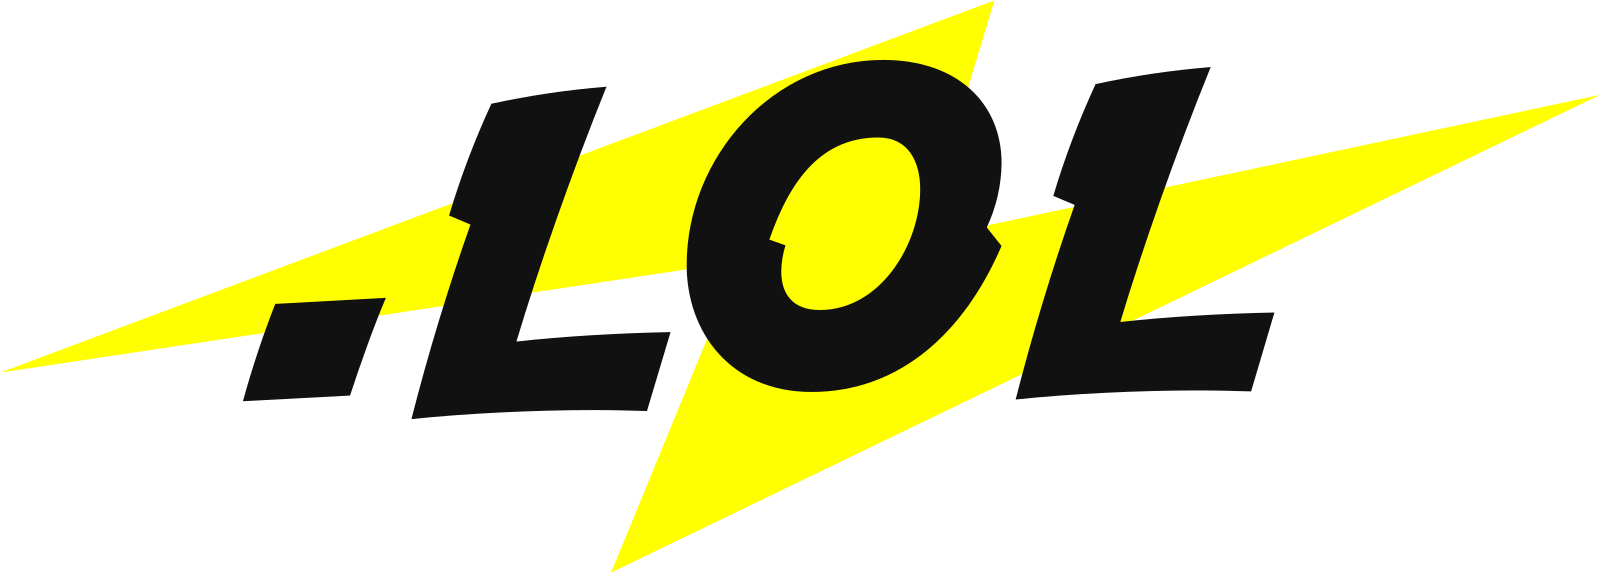 domain .lol logo